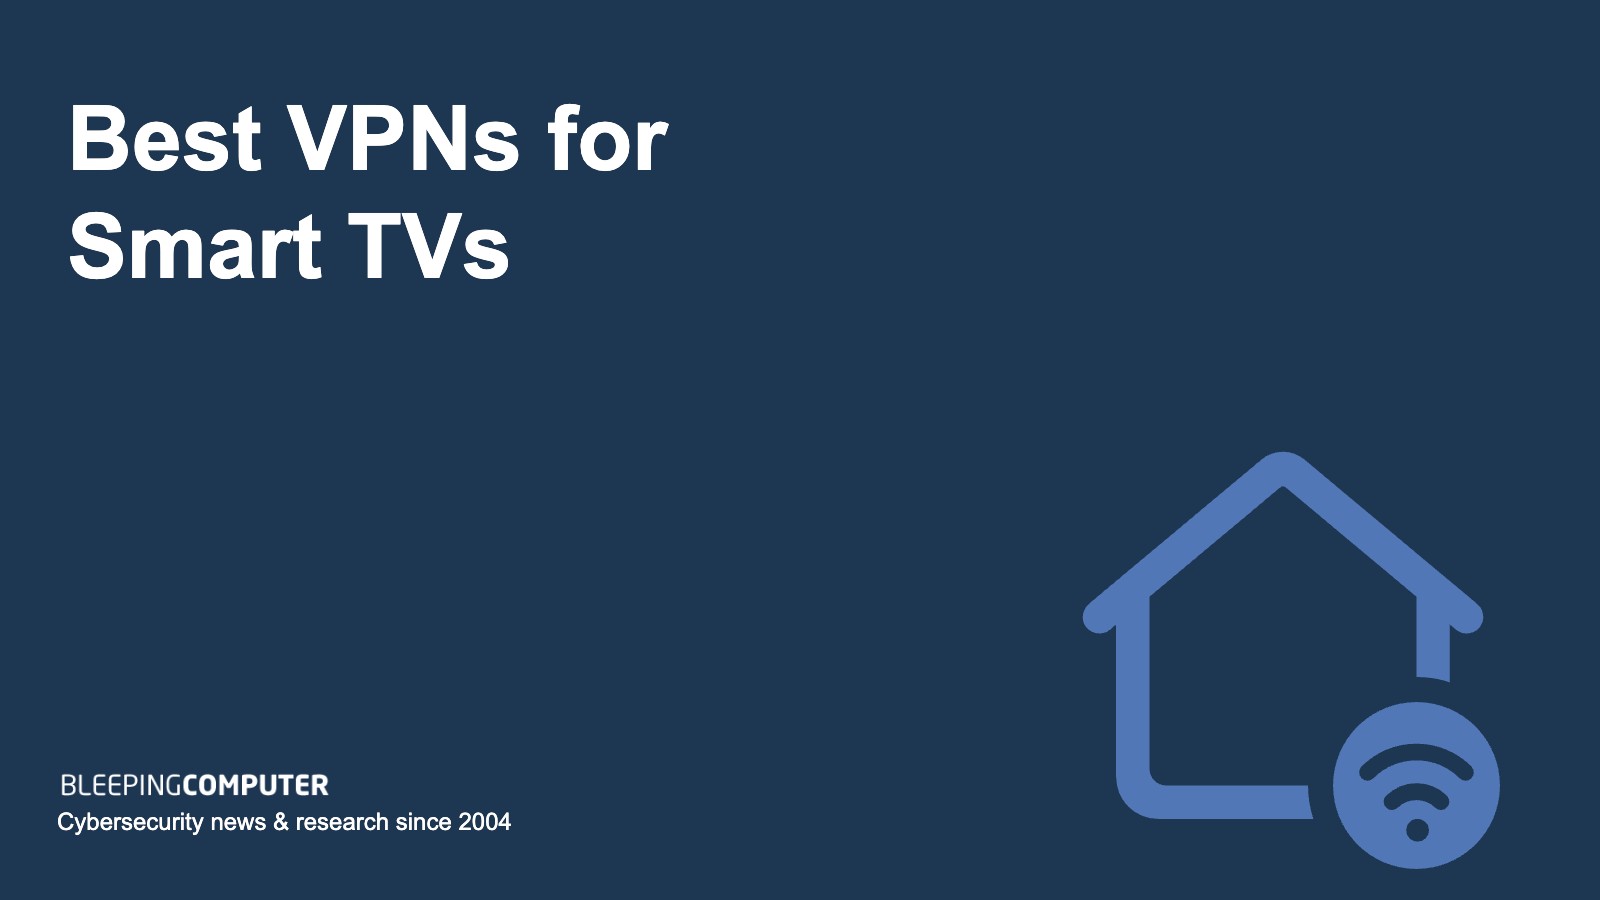 5 Best VPNs For Samsung Smart TV in 2023